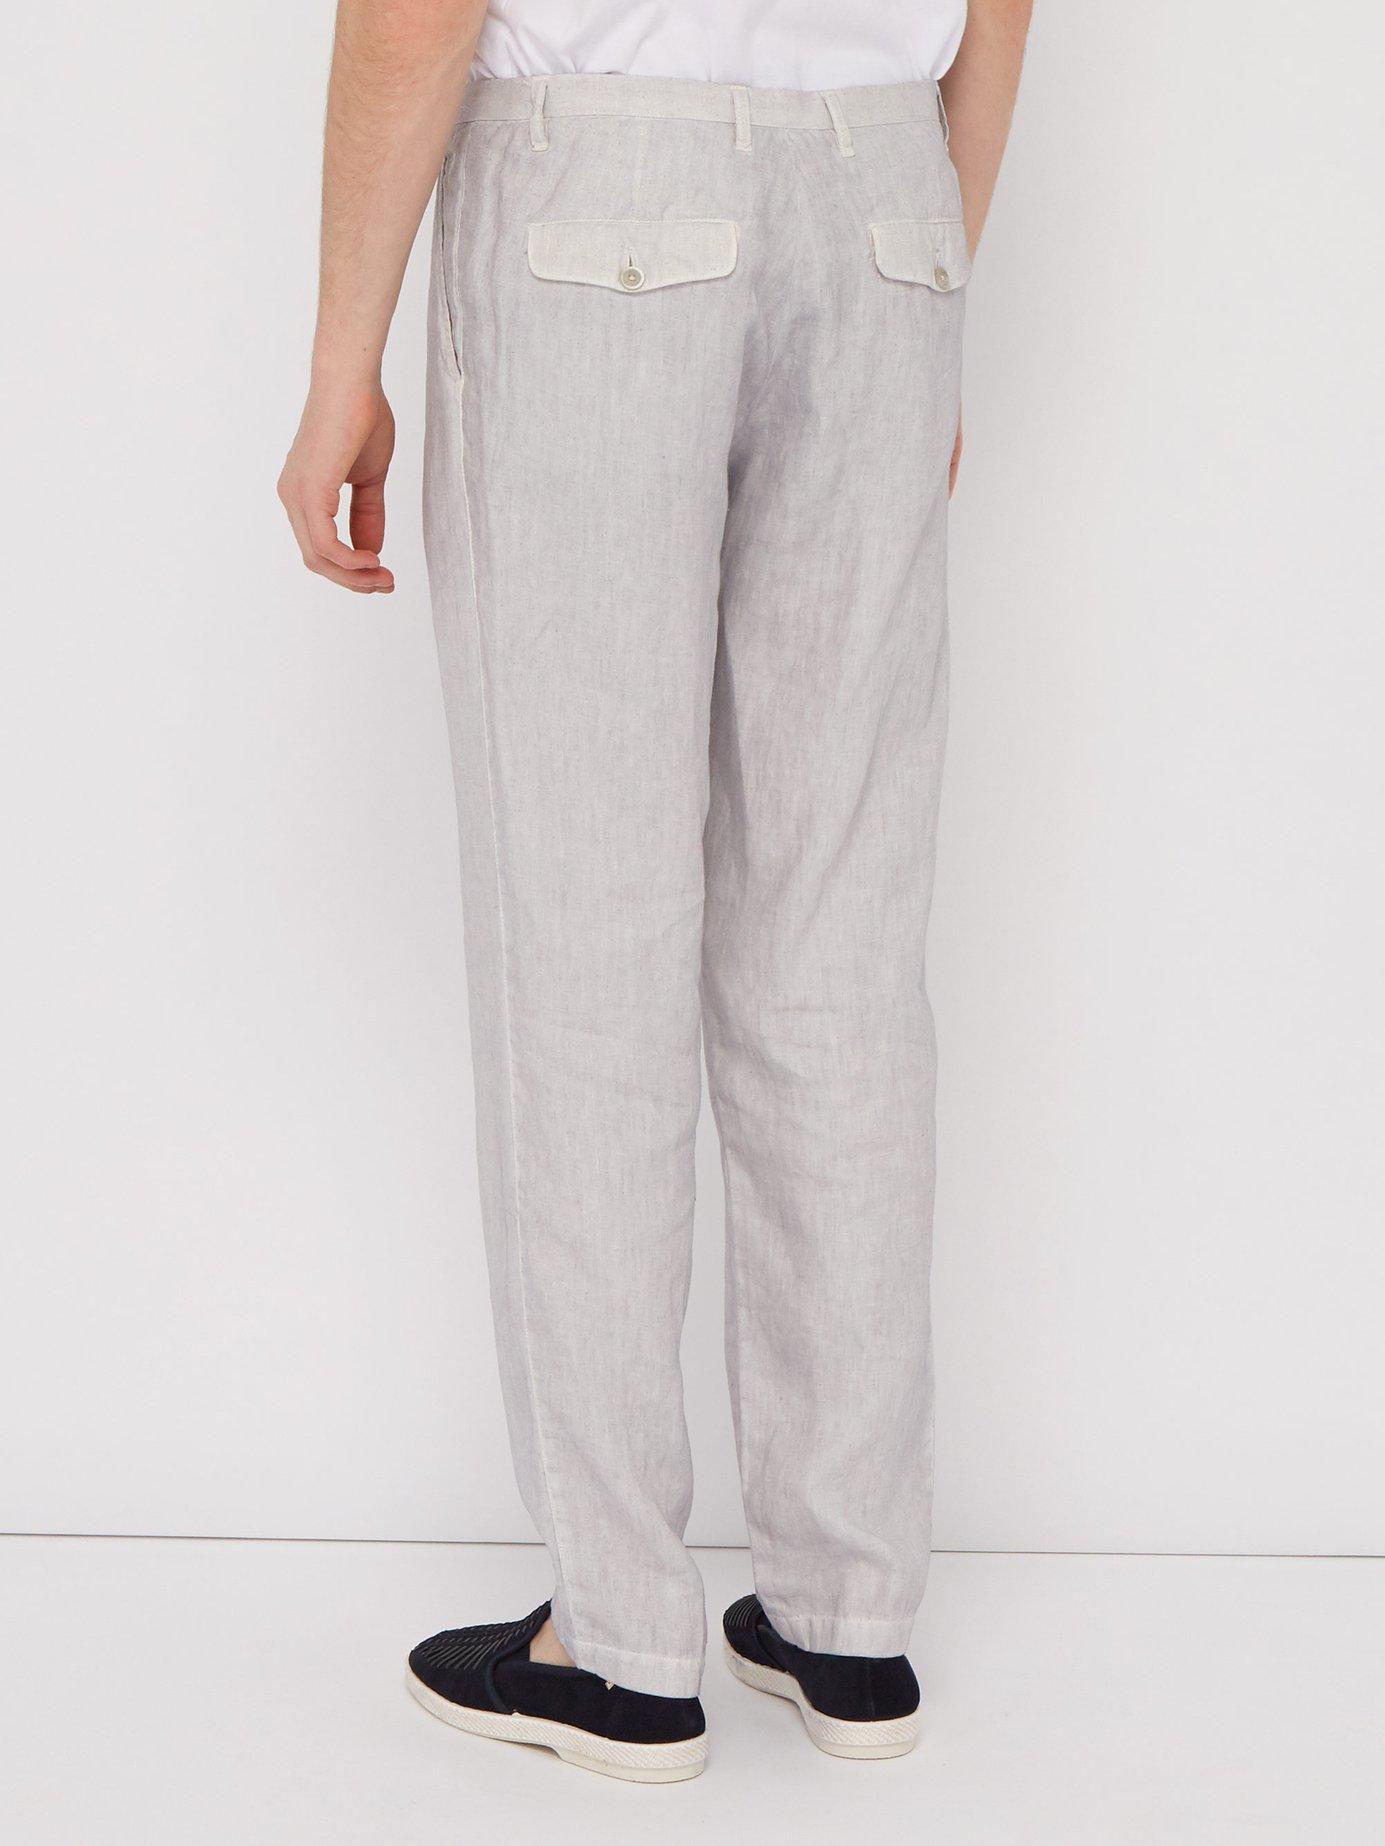 120% Lino Linen Trousers in Grey (Gray) for Men - Lyst